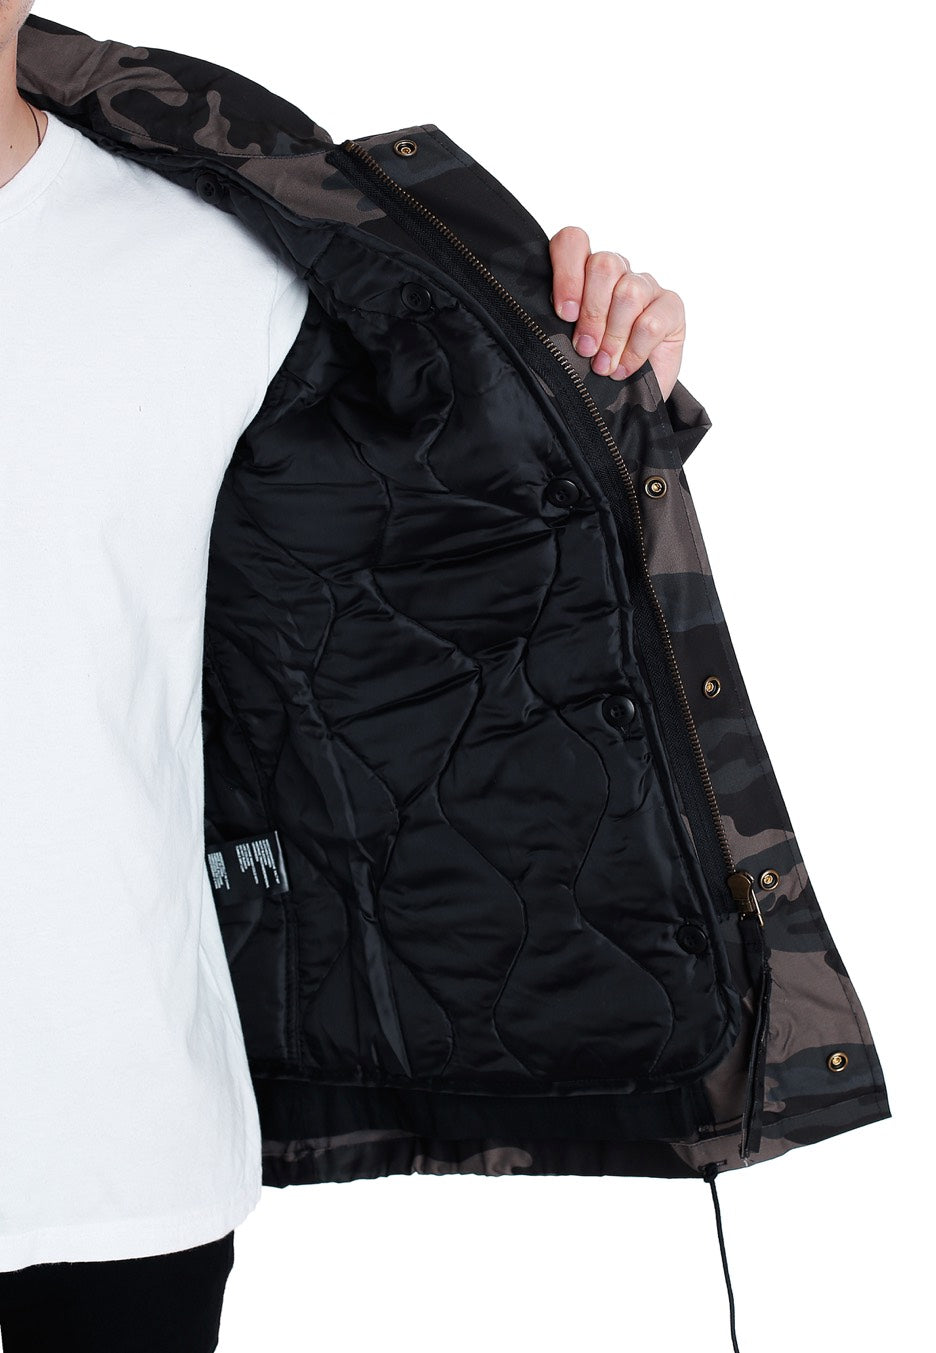 Brandit - M-65 Classic Darkcamo - Jacket